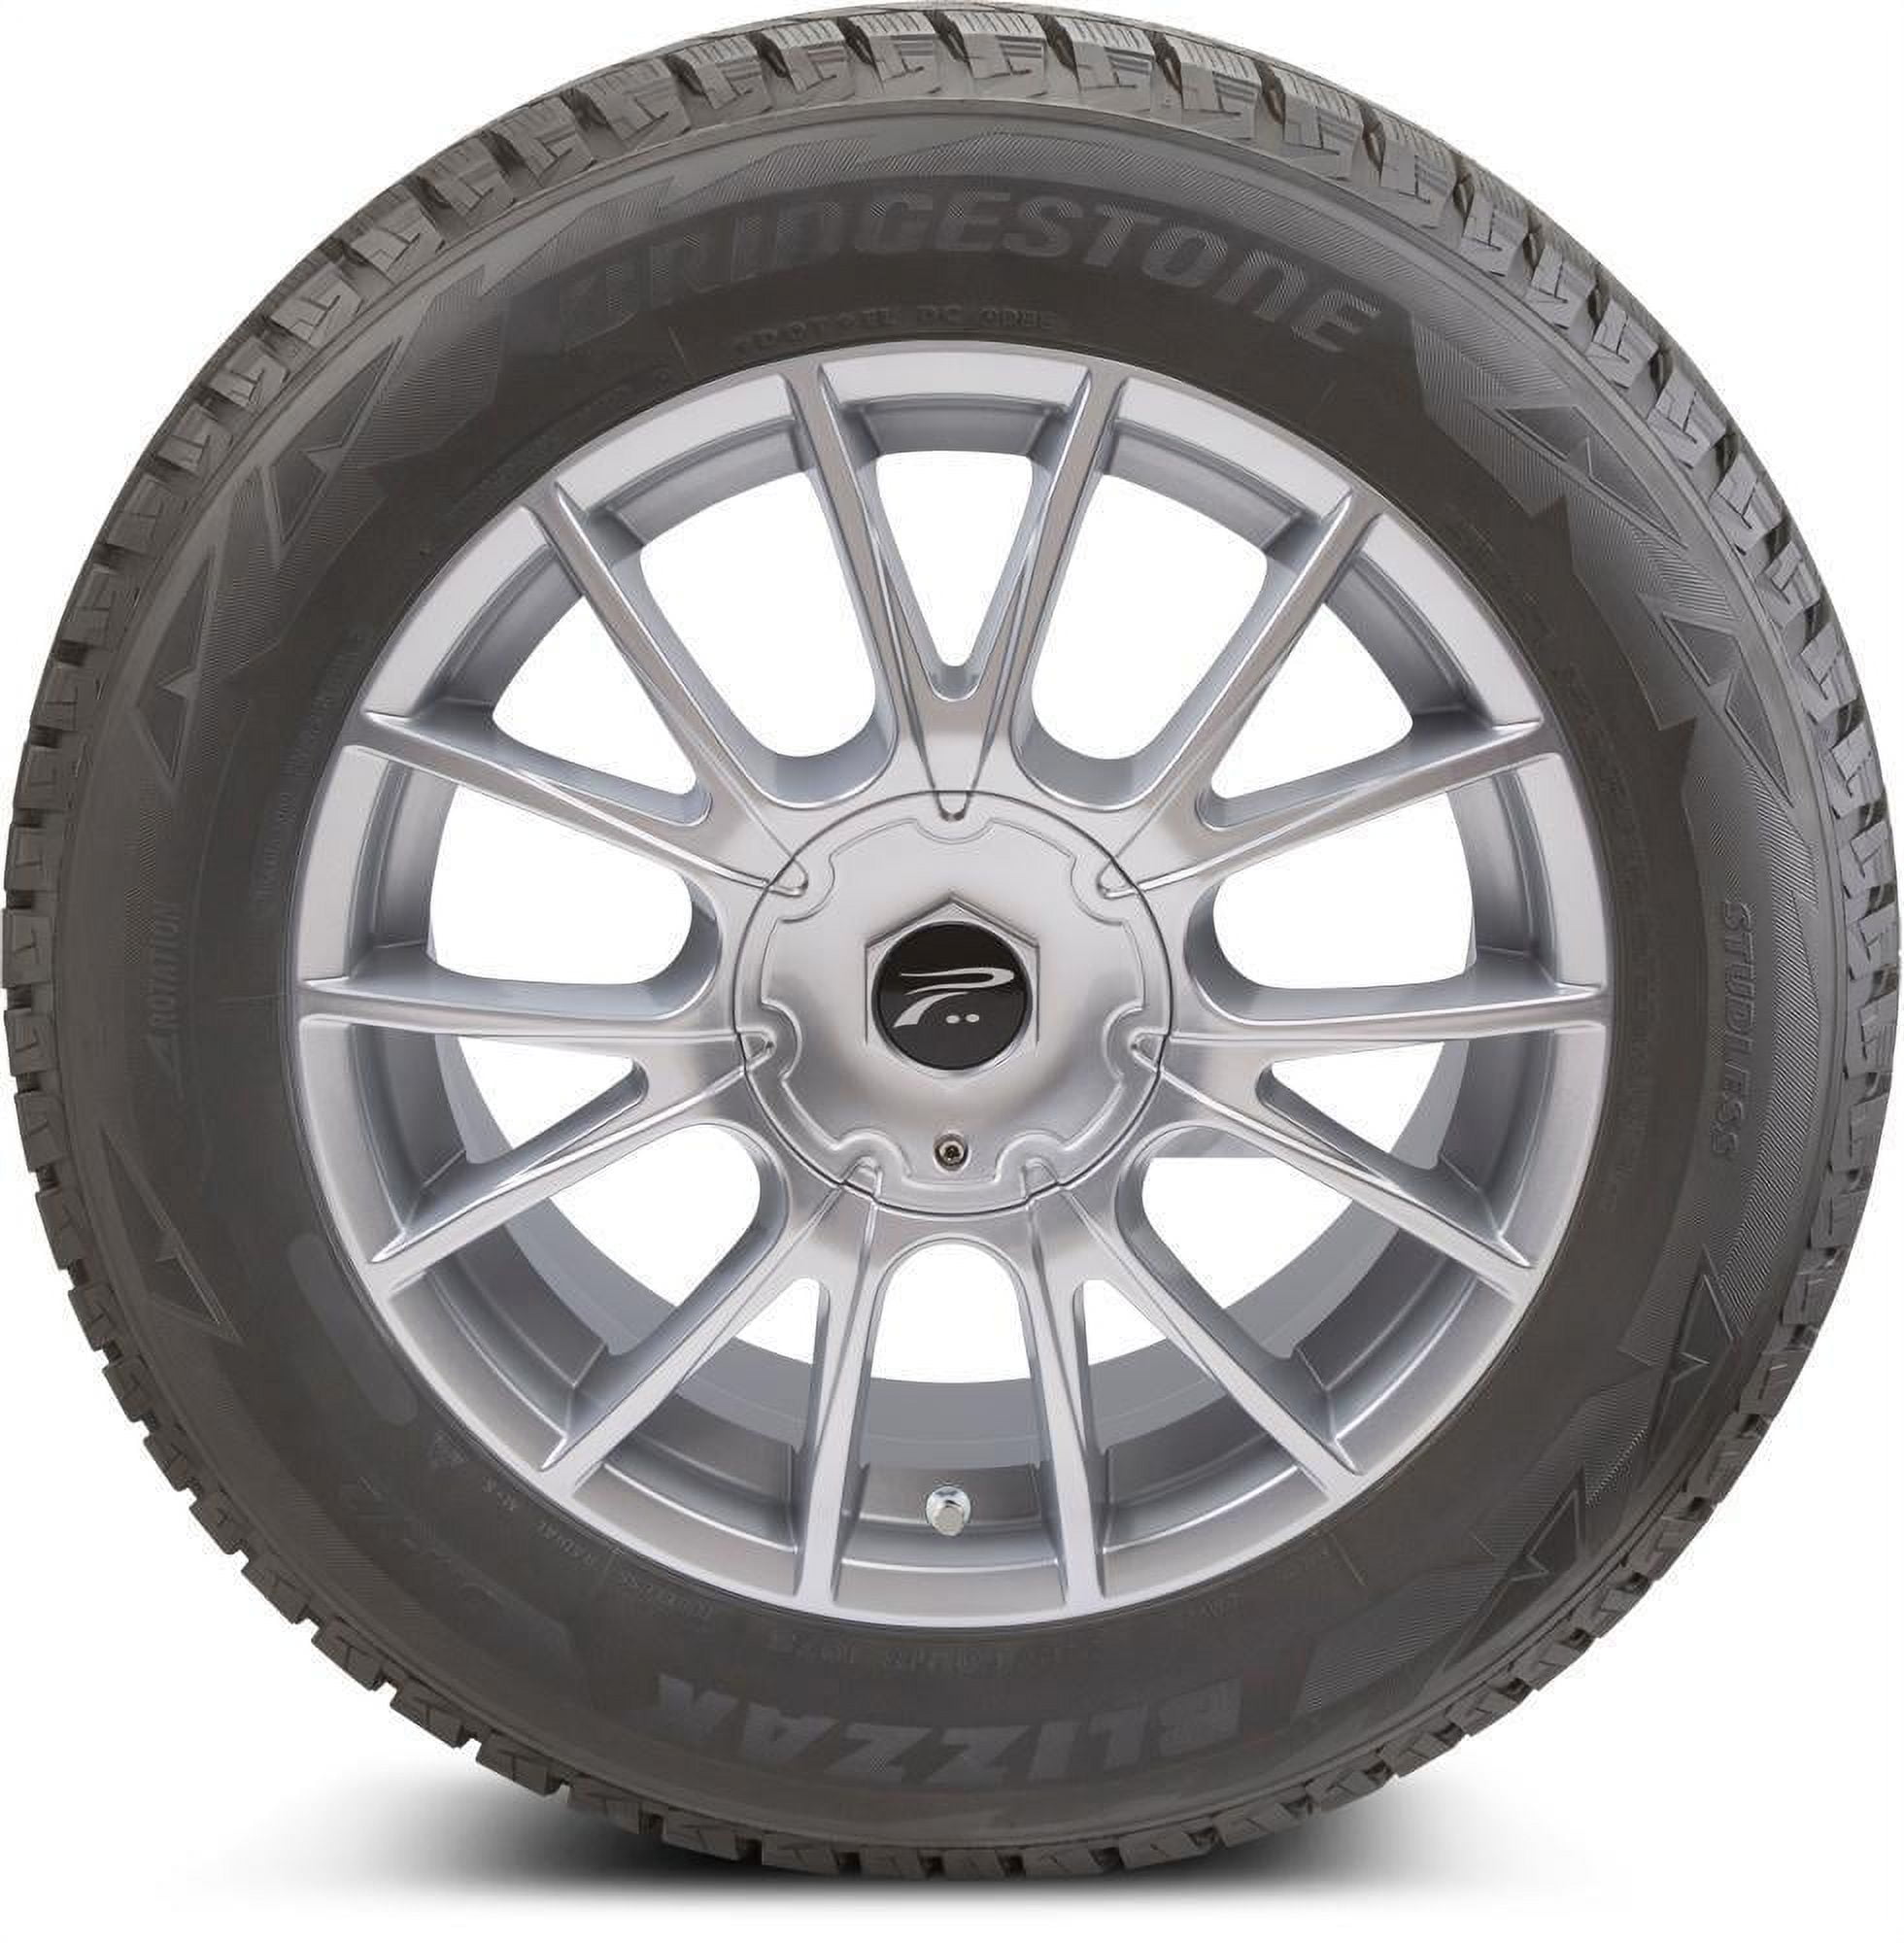 dm-v2 tire LT285/60R18 blizzak bsw Bridgestone winter 116R